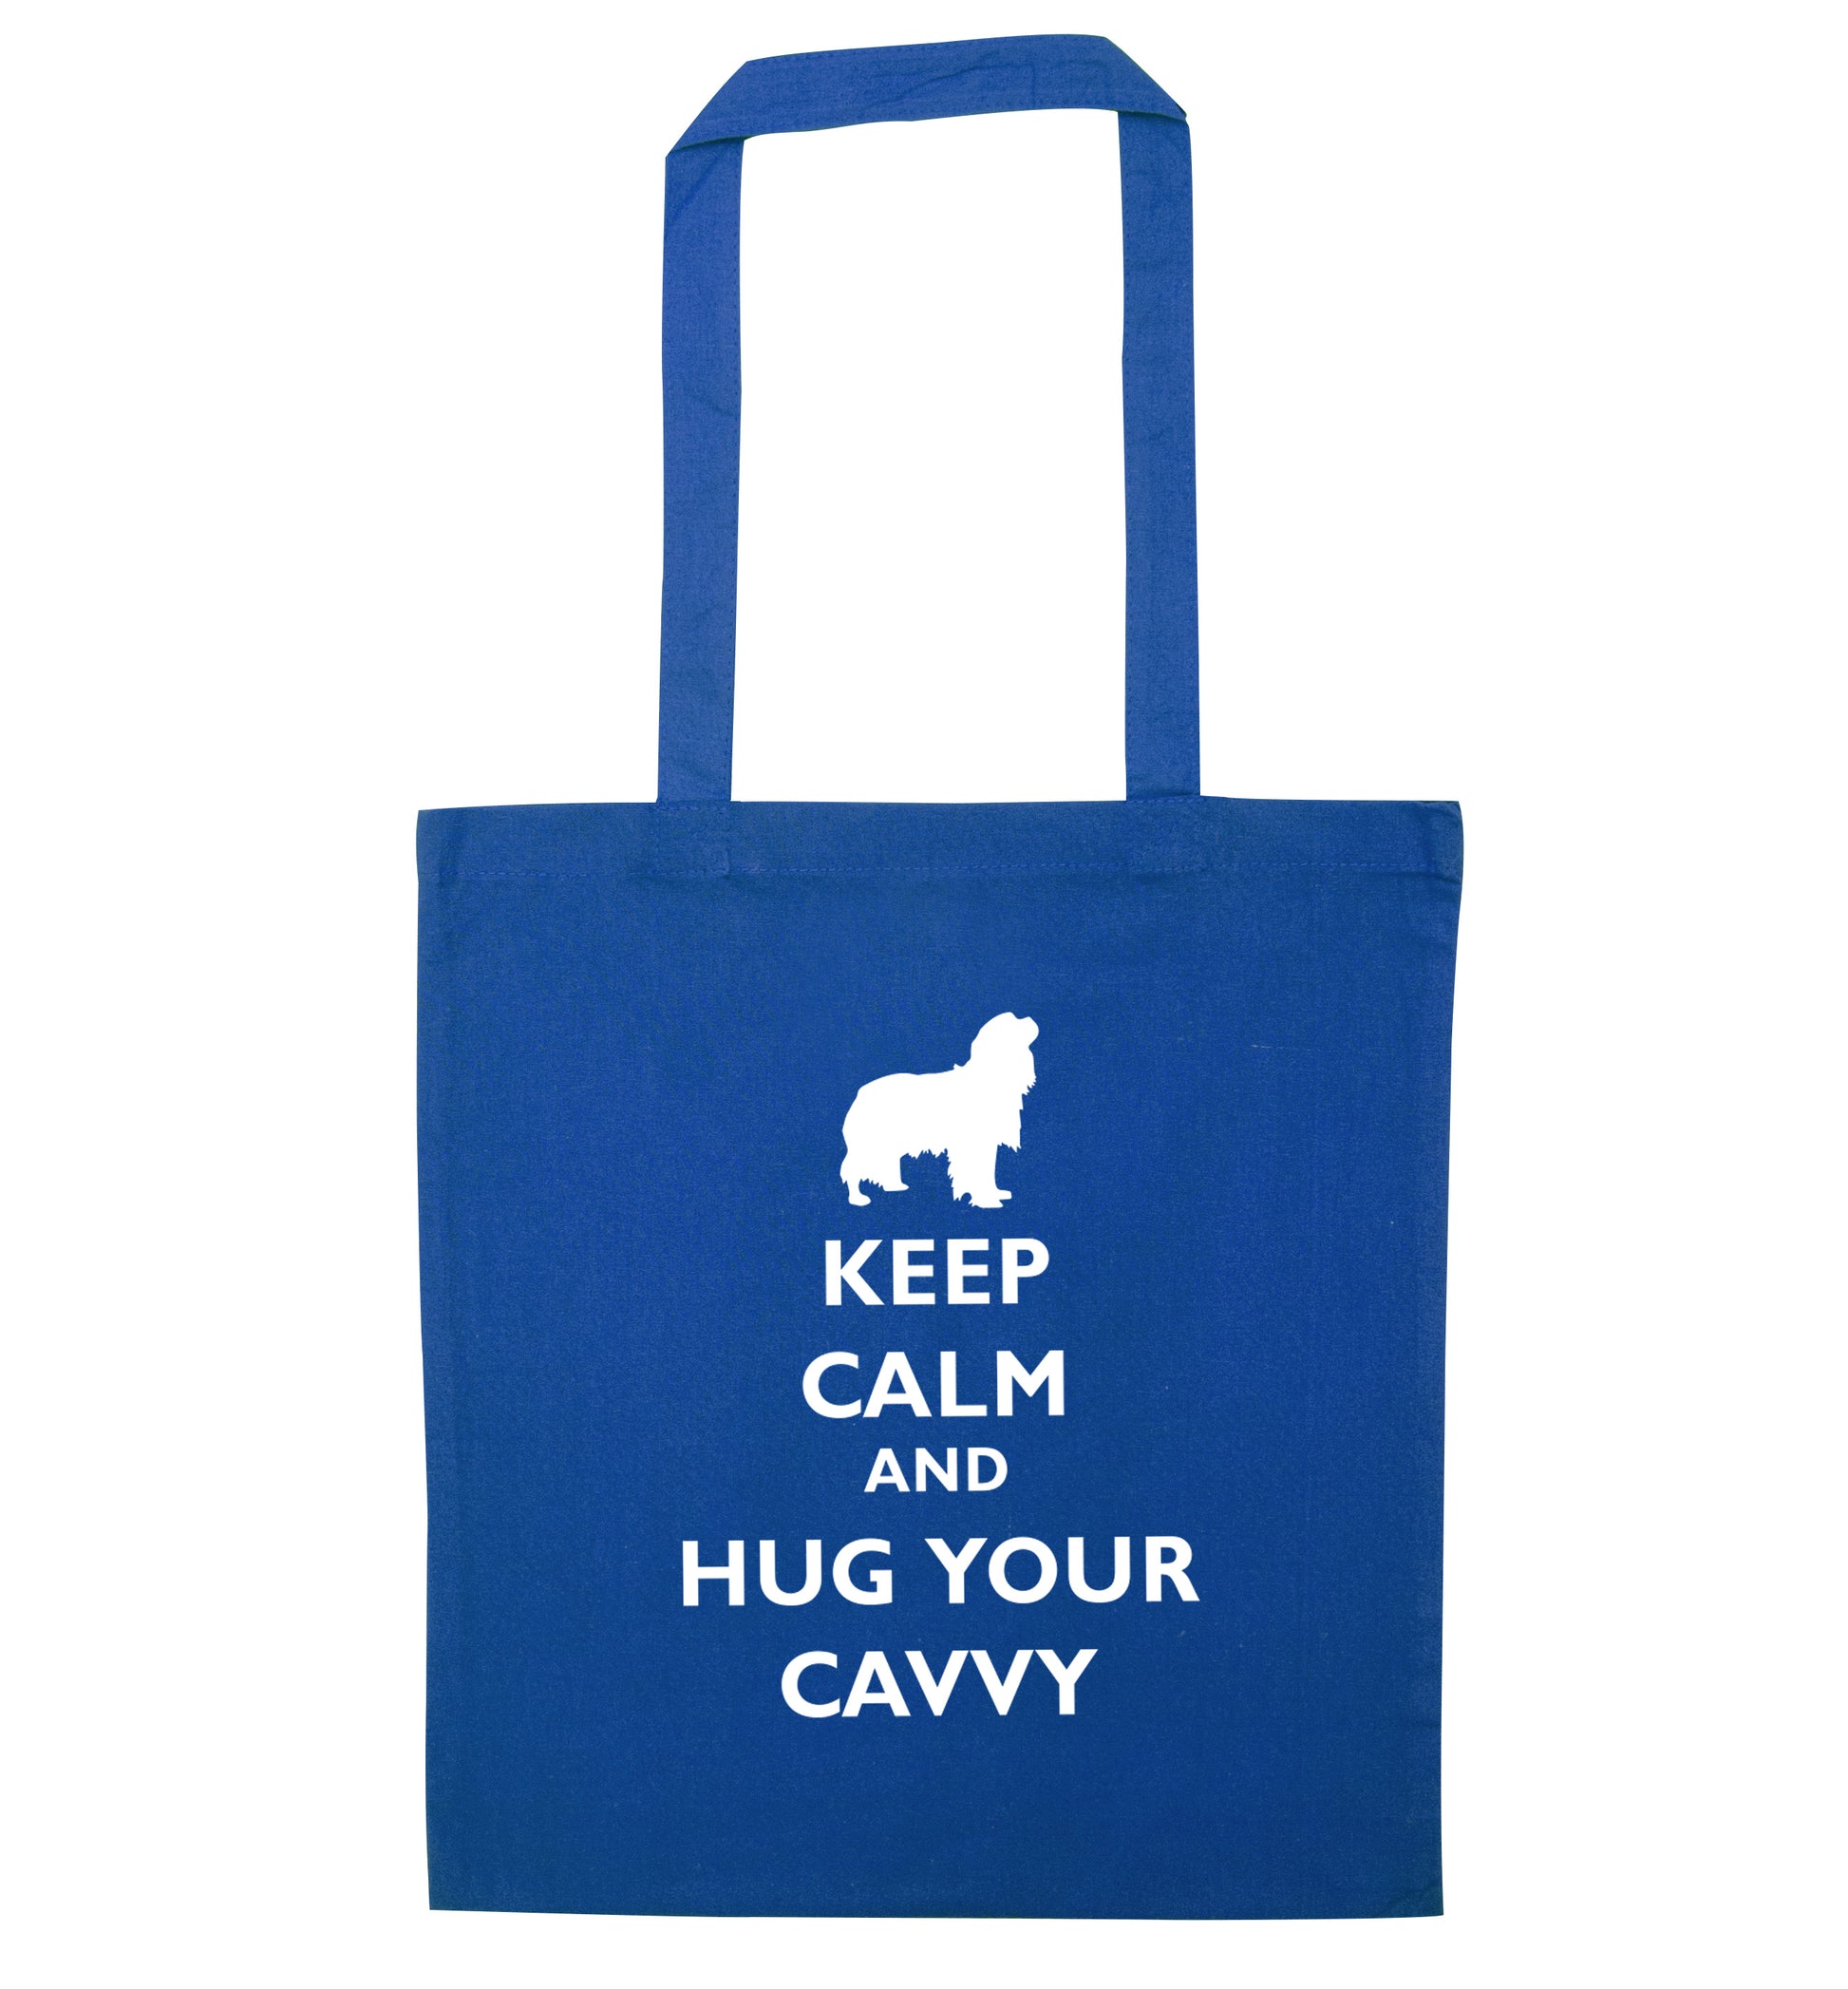 Keep calm and hug your cavvy blue tote bag